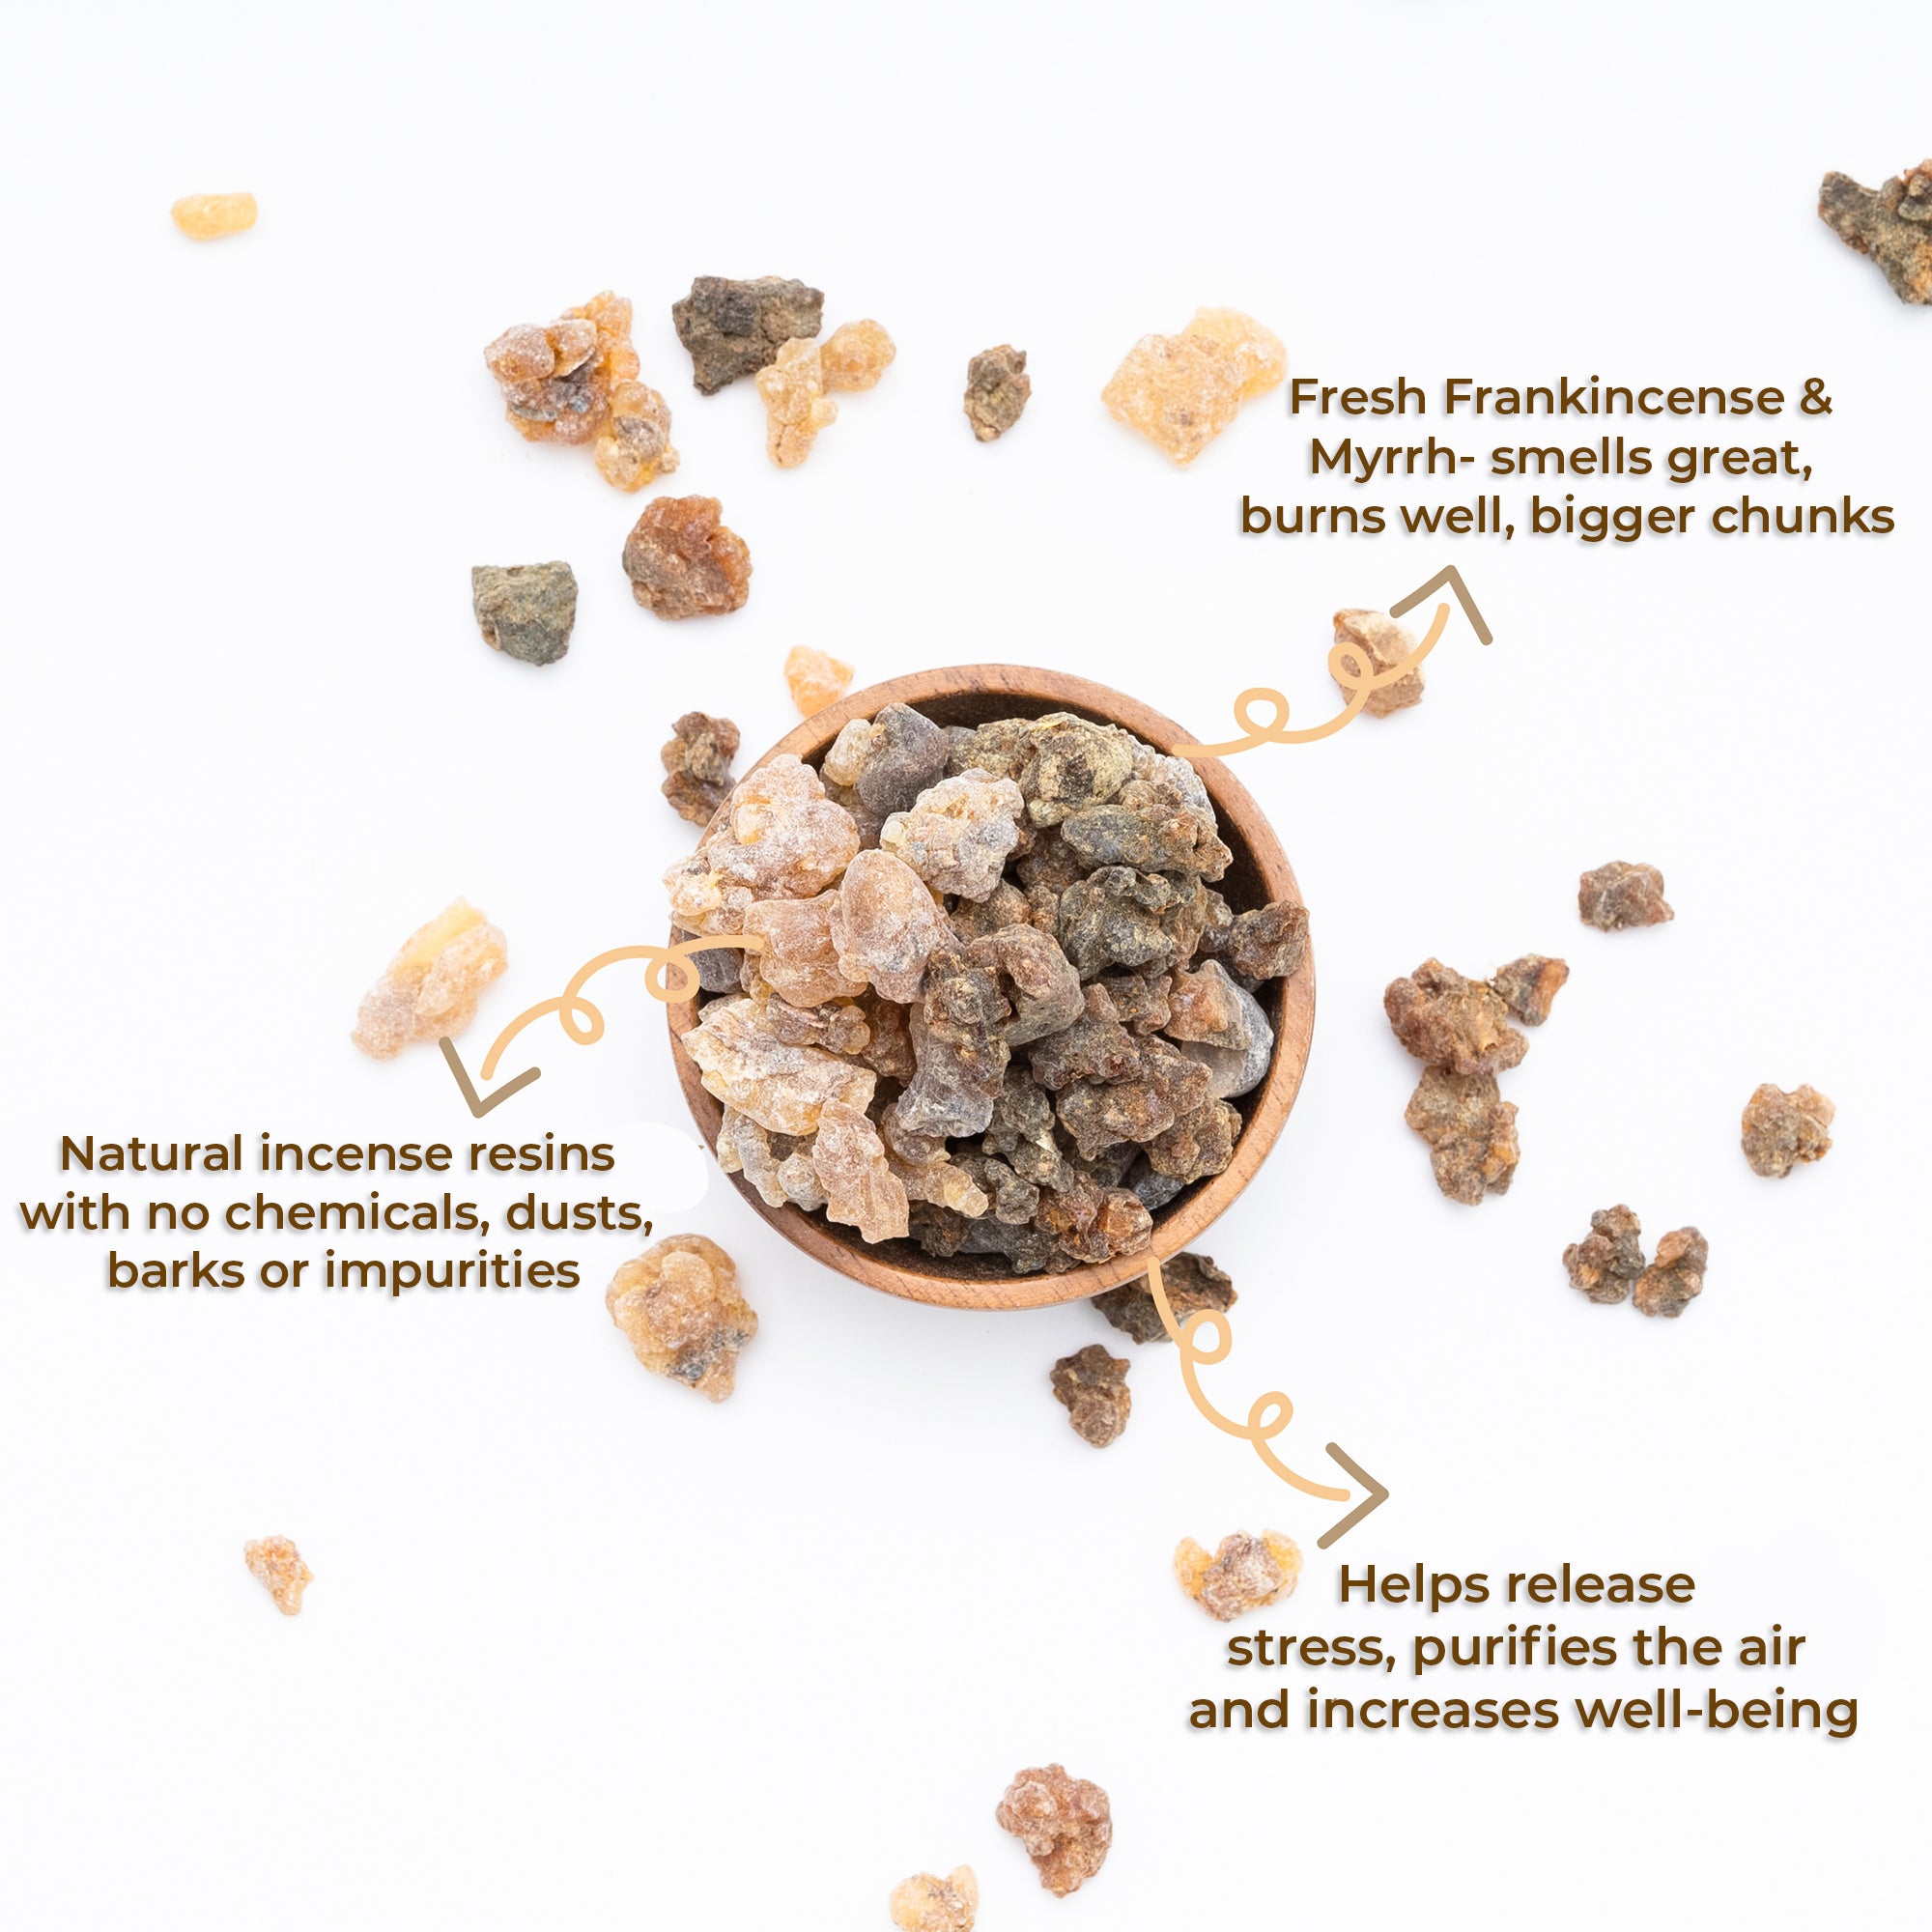 Frankincense and Myrrh and Its Socio-Economic Impact